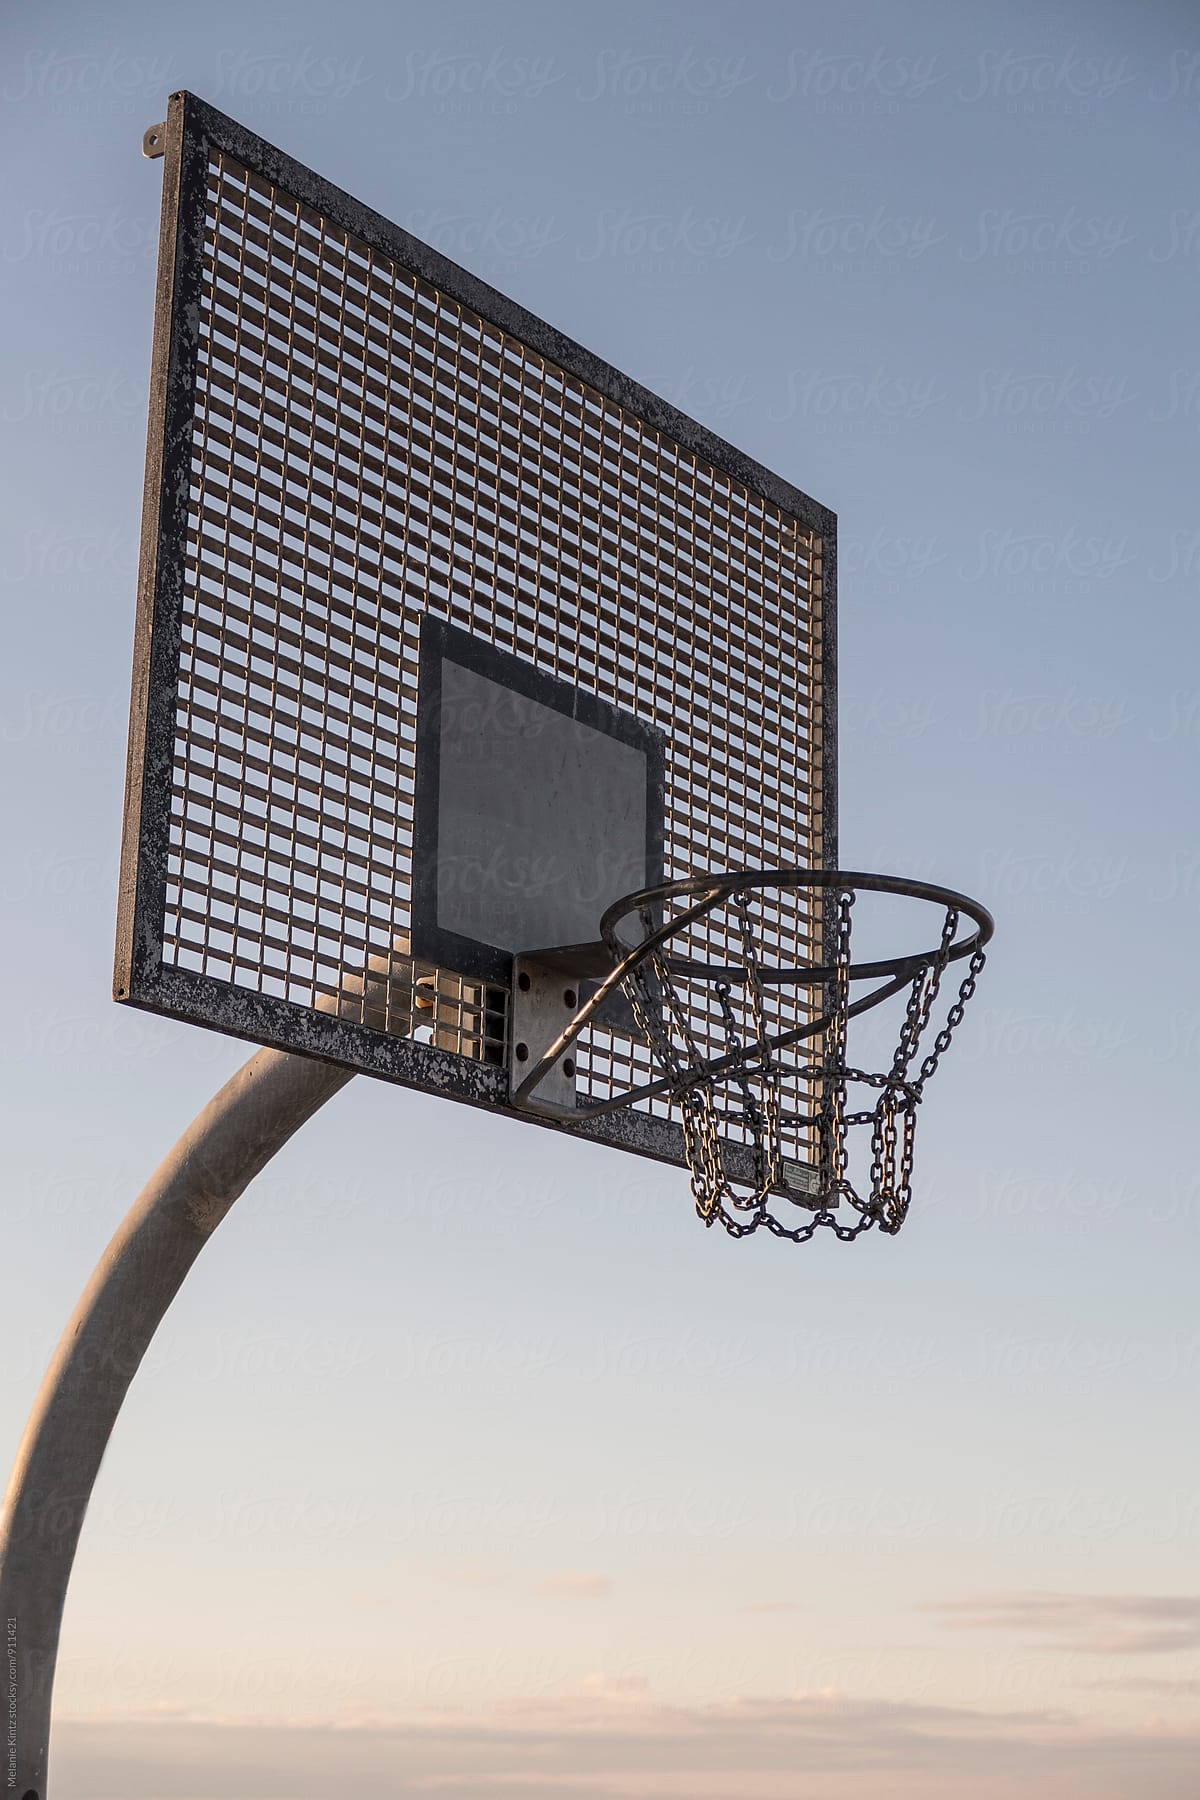 Empty outdoors basketball backboard